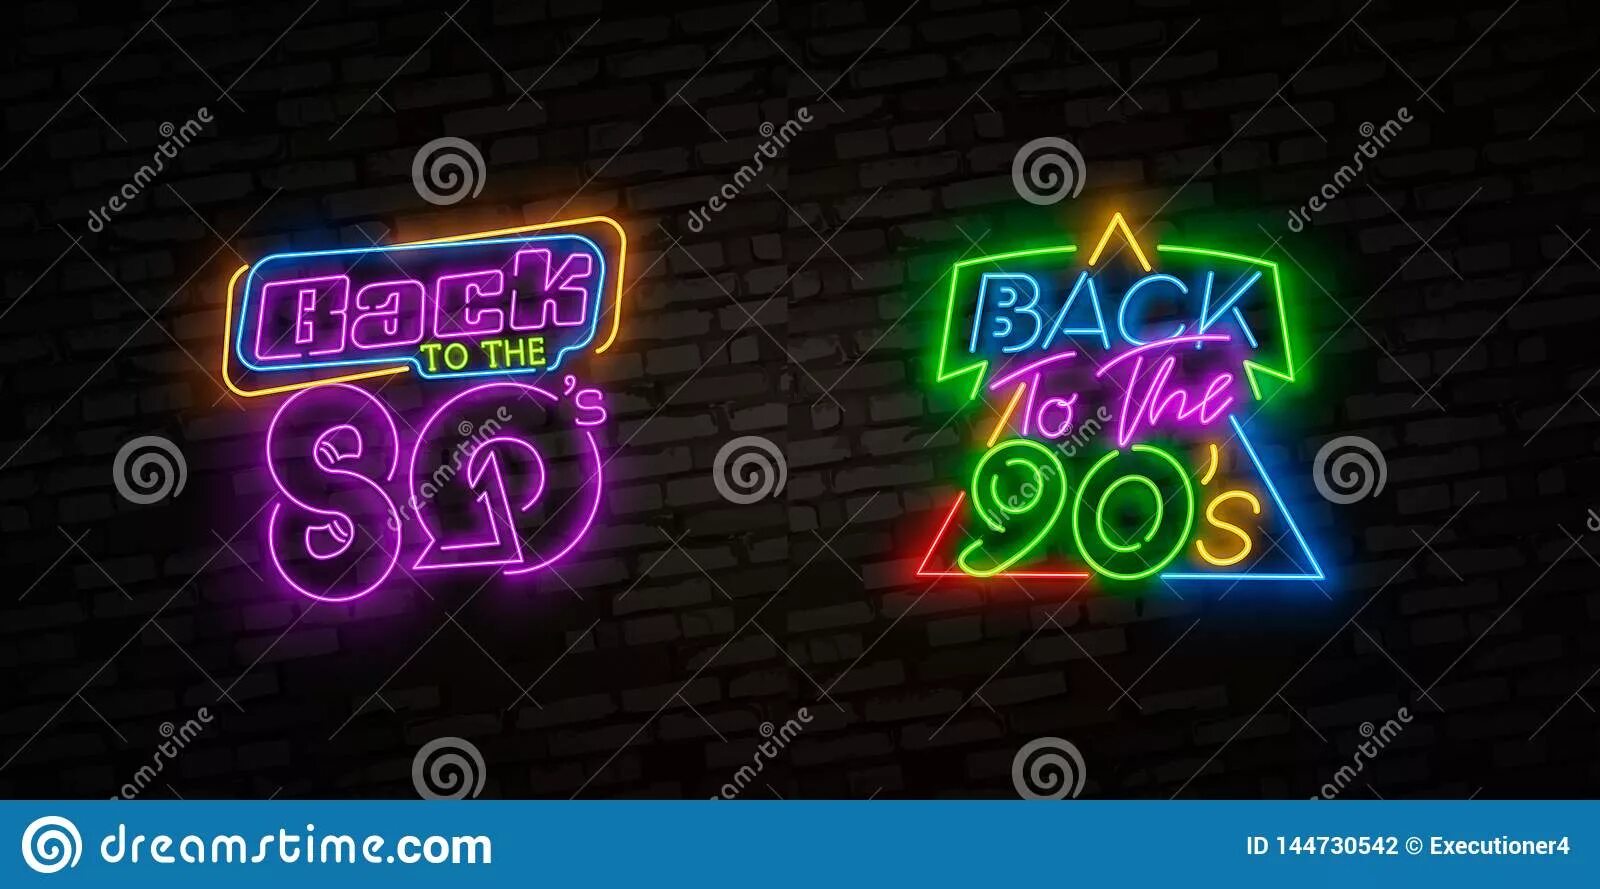 Neon 80s шрифт. Неоновые вывески в стиле 80-х. Вывеска в стиле 80х. Неоновые вывески восьмидесятых. Back 80